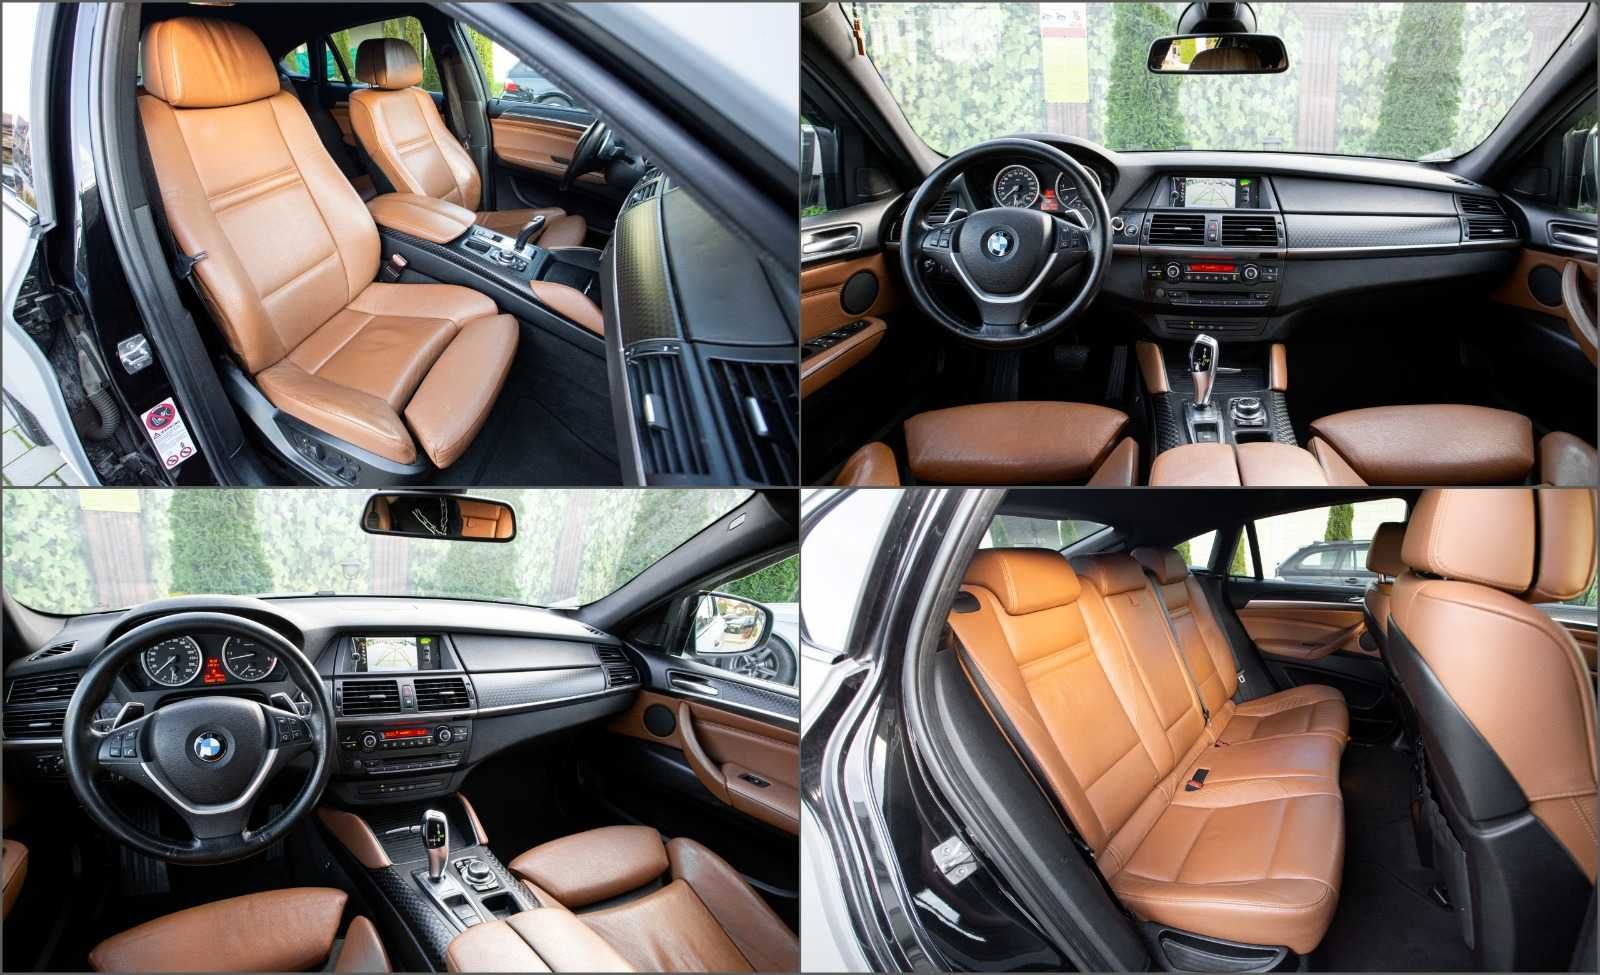 BMW X6 2012 205.000 KM 3.0D 245 CP FACELIFT